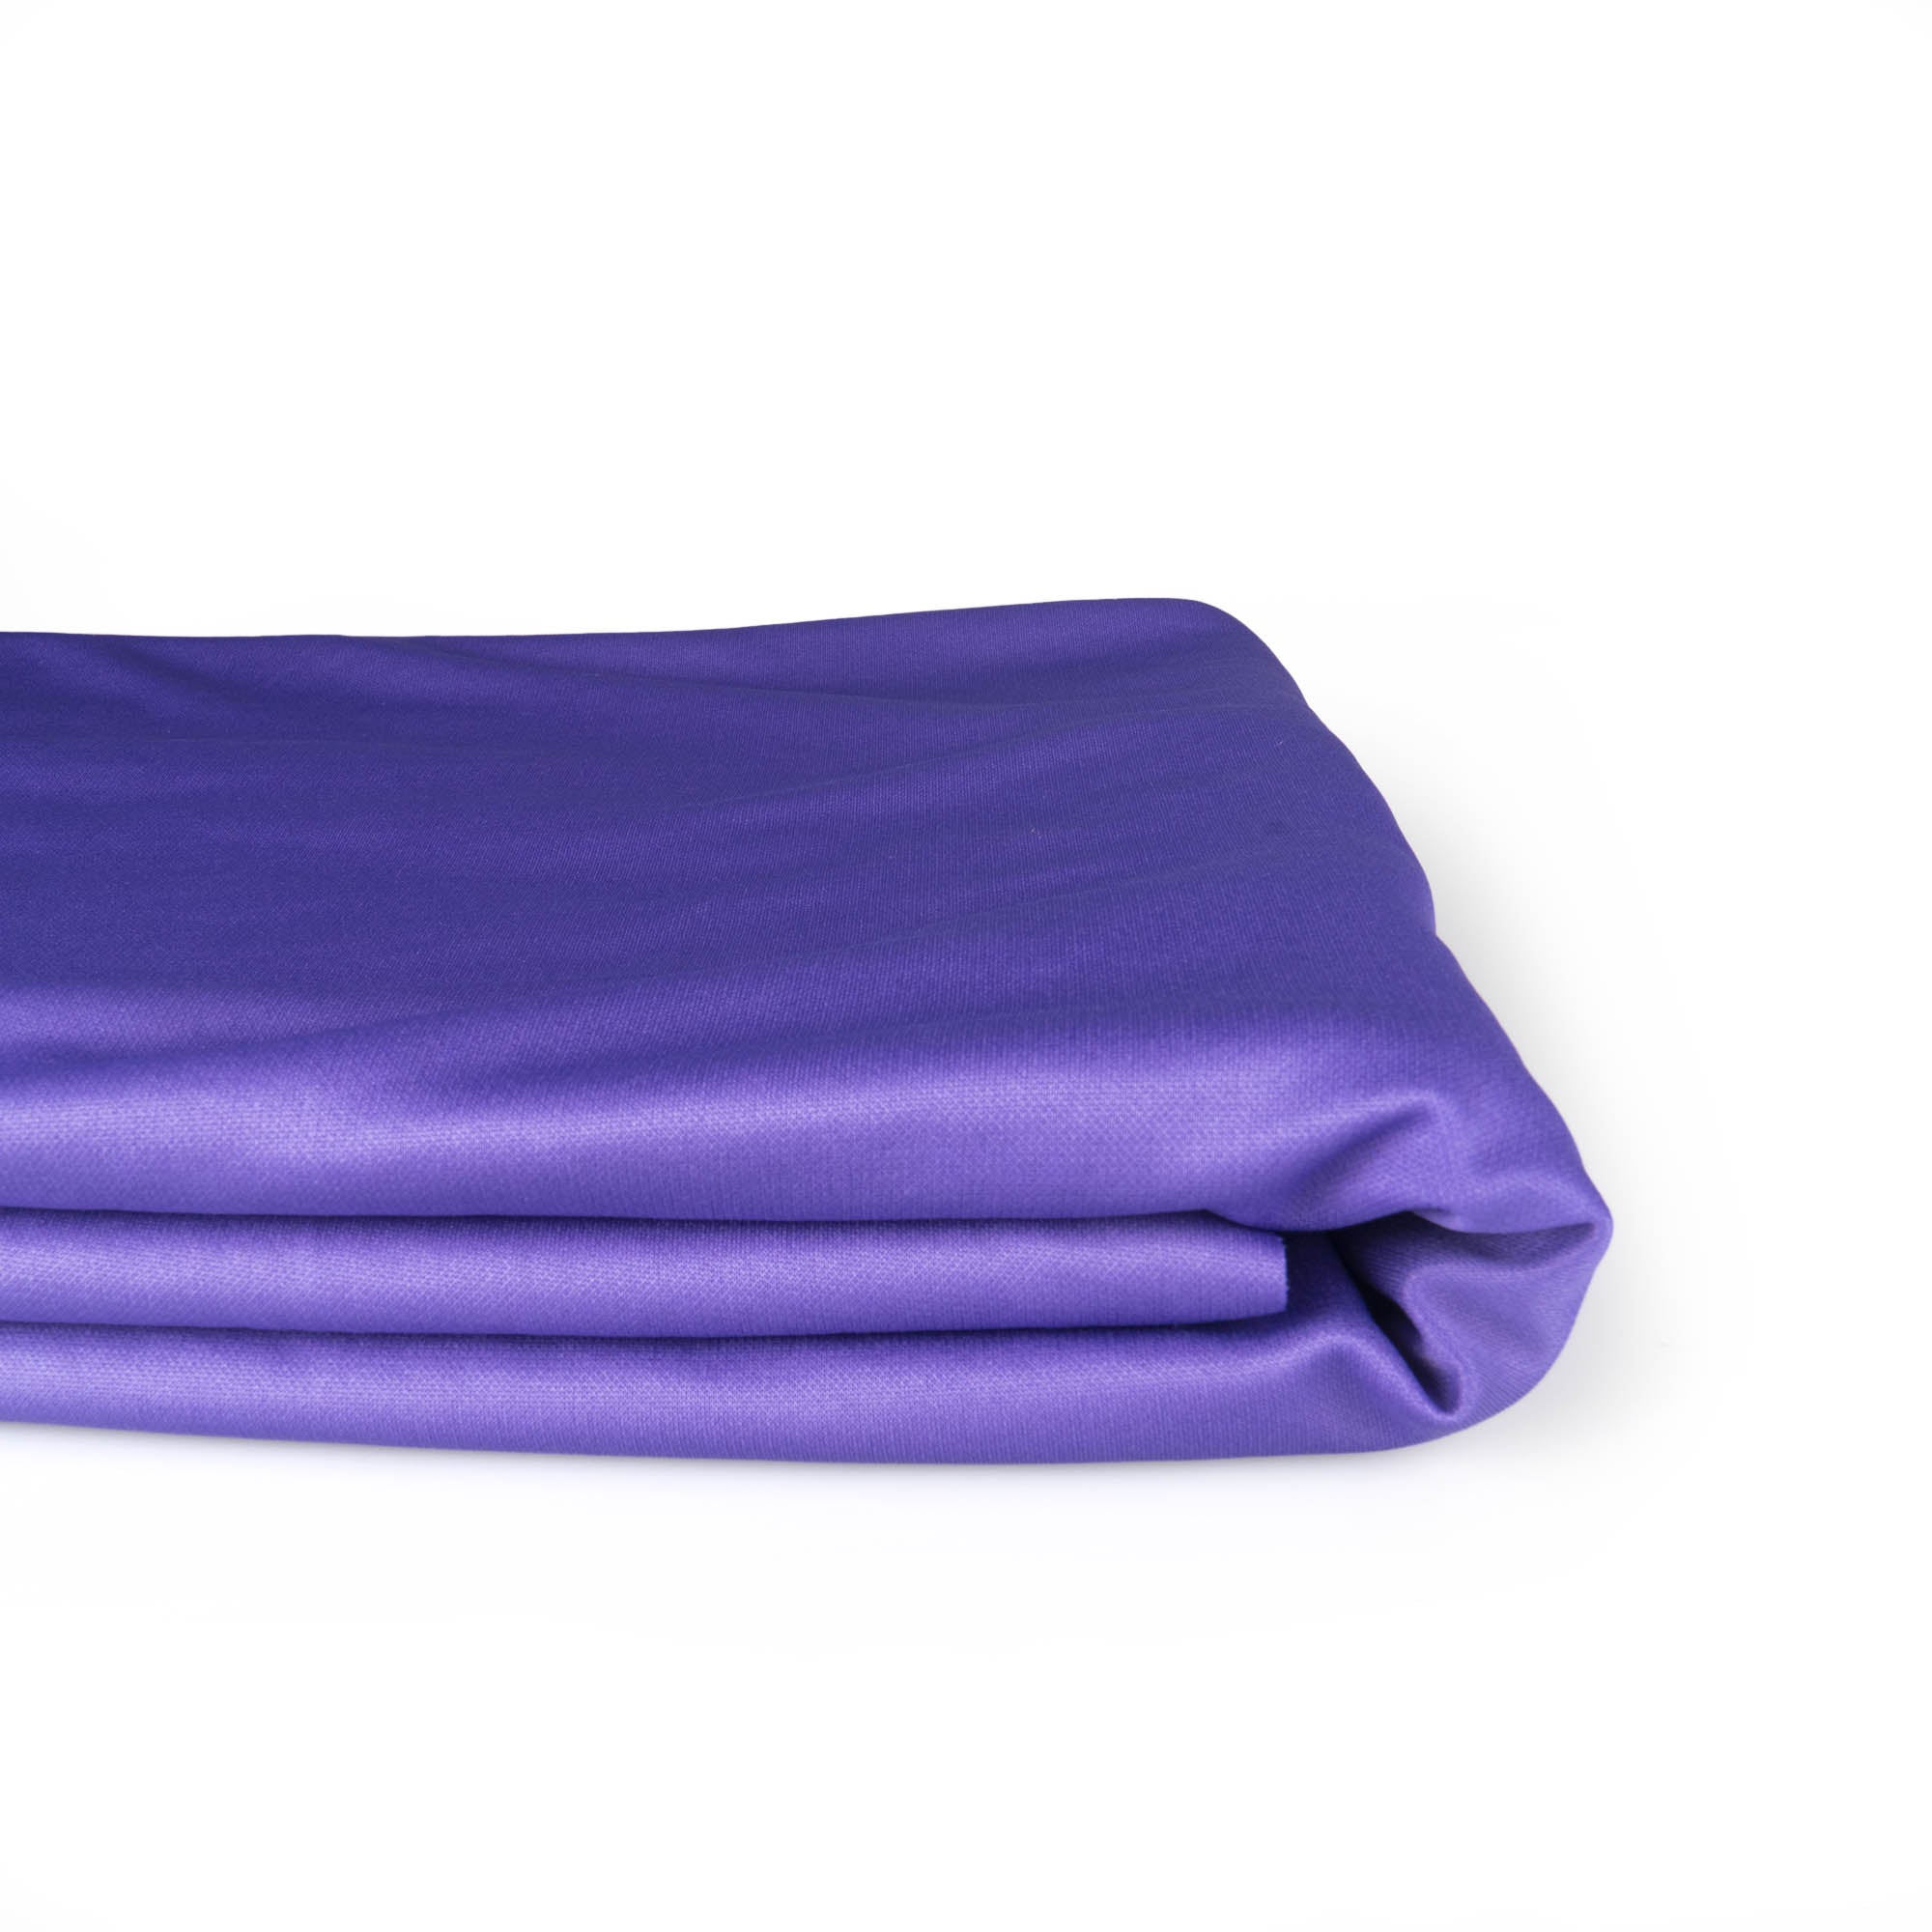 Purple silk folded